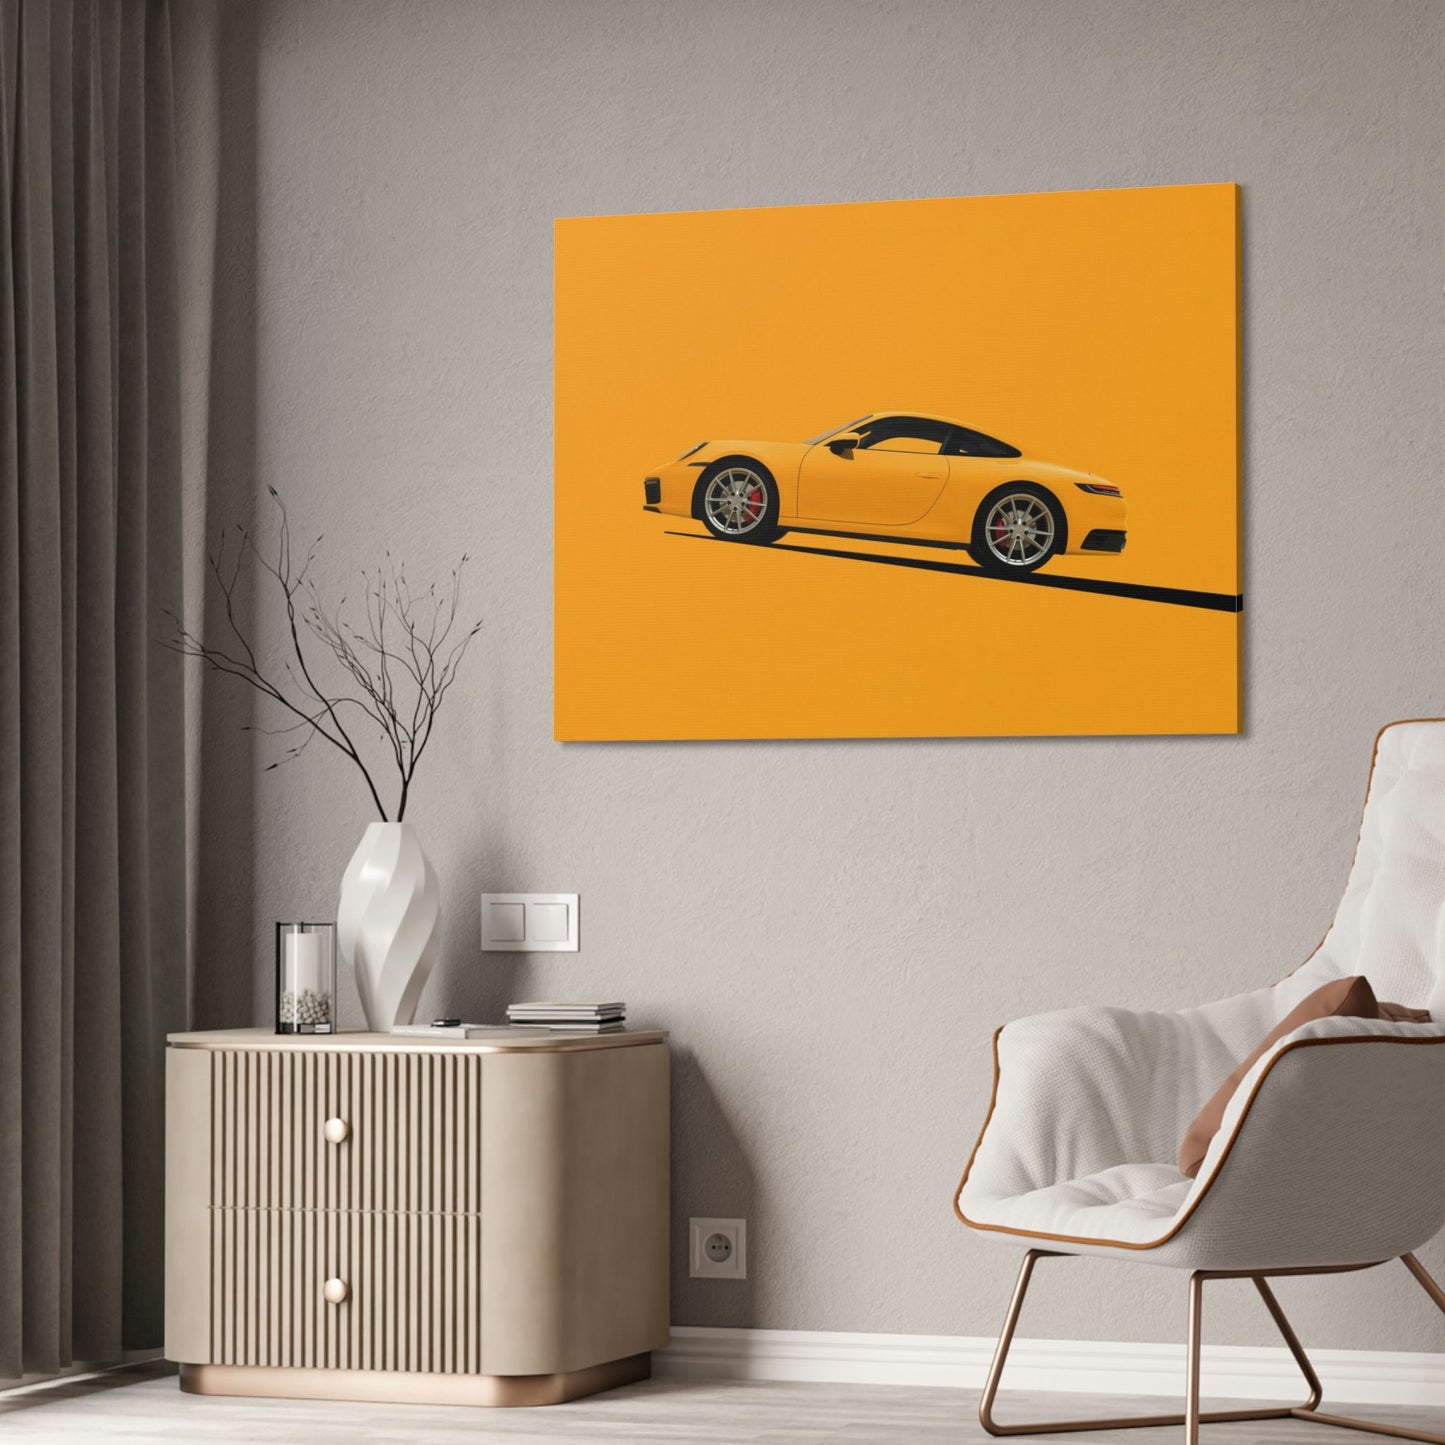 Artistic Porsche: Natural Canvas & Poster Print of a Unique Design